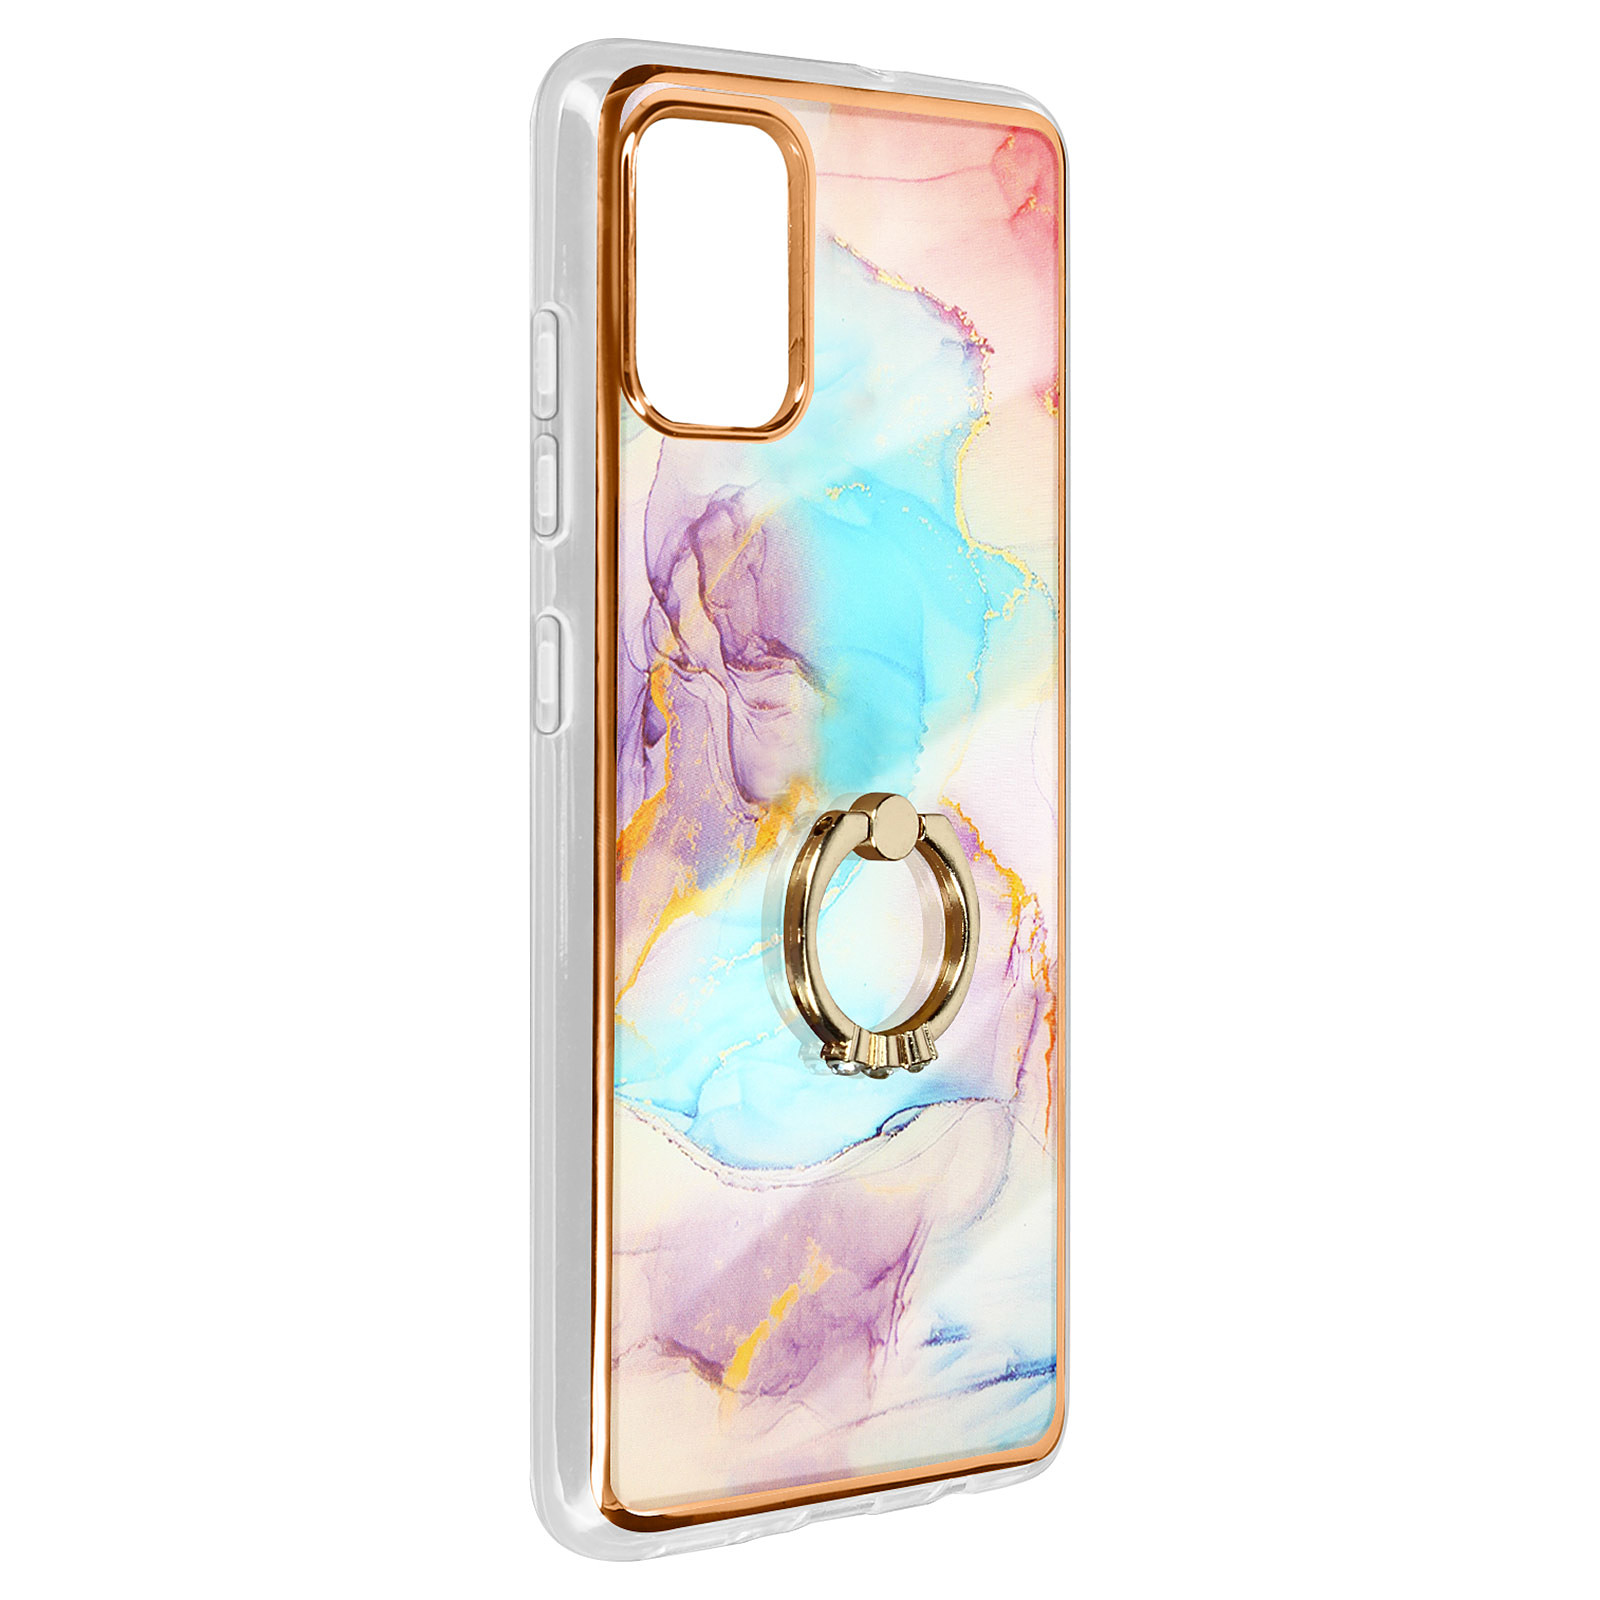 Avizar Coque pour Samsung Galaxy A51 Bi-matière avec Bague de maintien a  strass effet bijou Motif marbre multicolore - Coque telephone Avizar